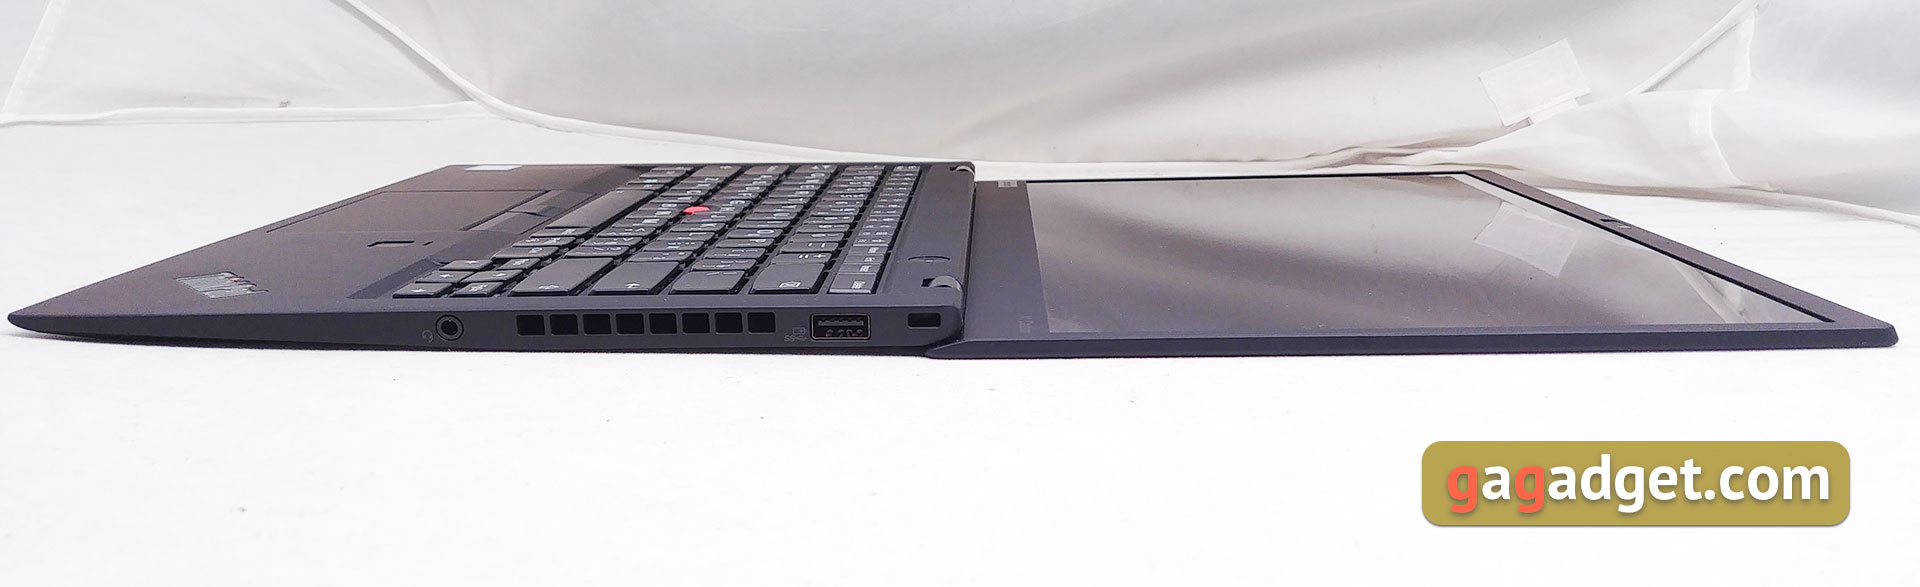 Обзор Lenovo ThinkPad X1 Carbon 6th Gen: топовый бизнес-ультрабук с HDR-экраном-24